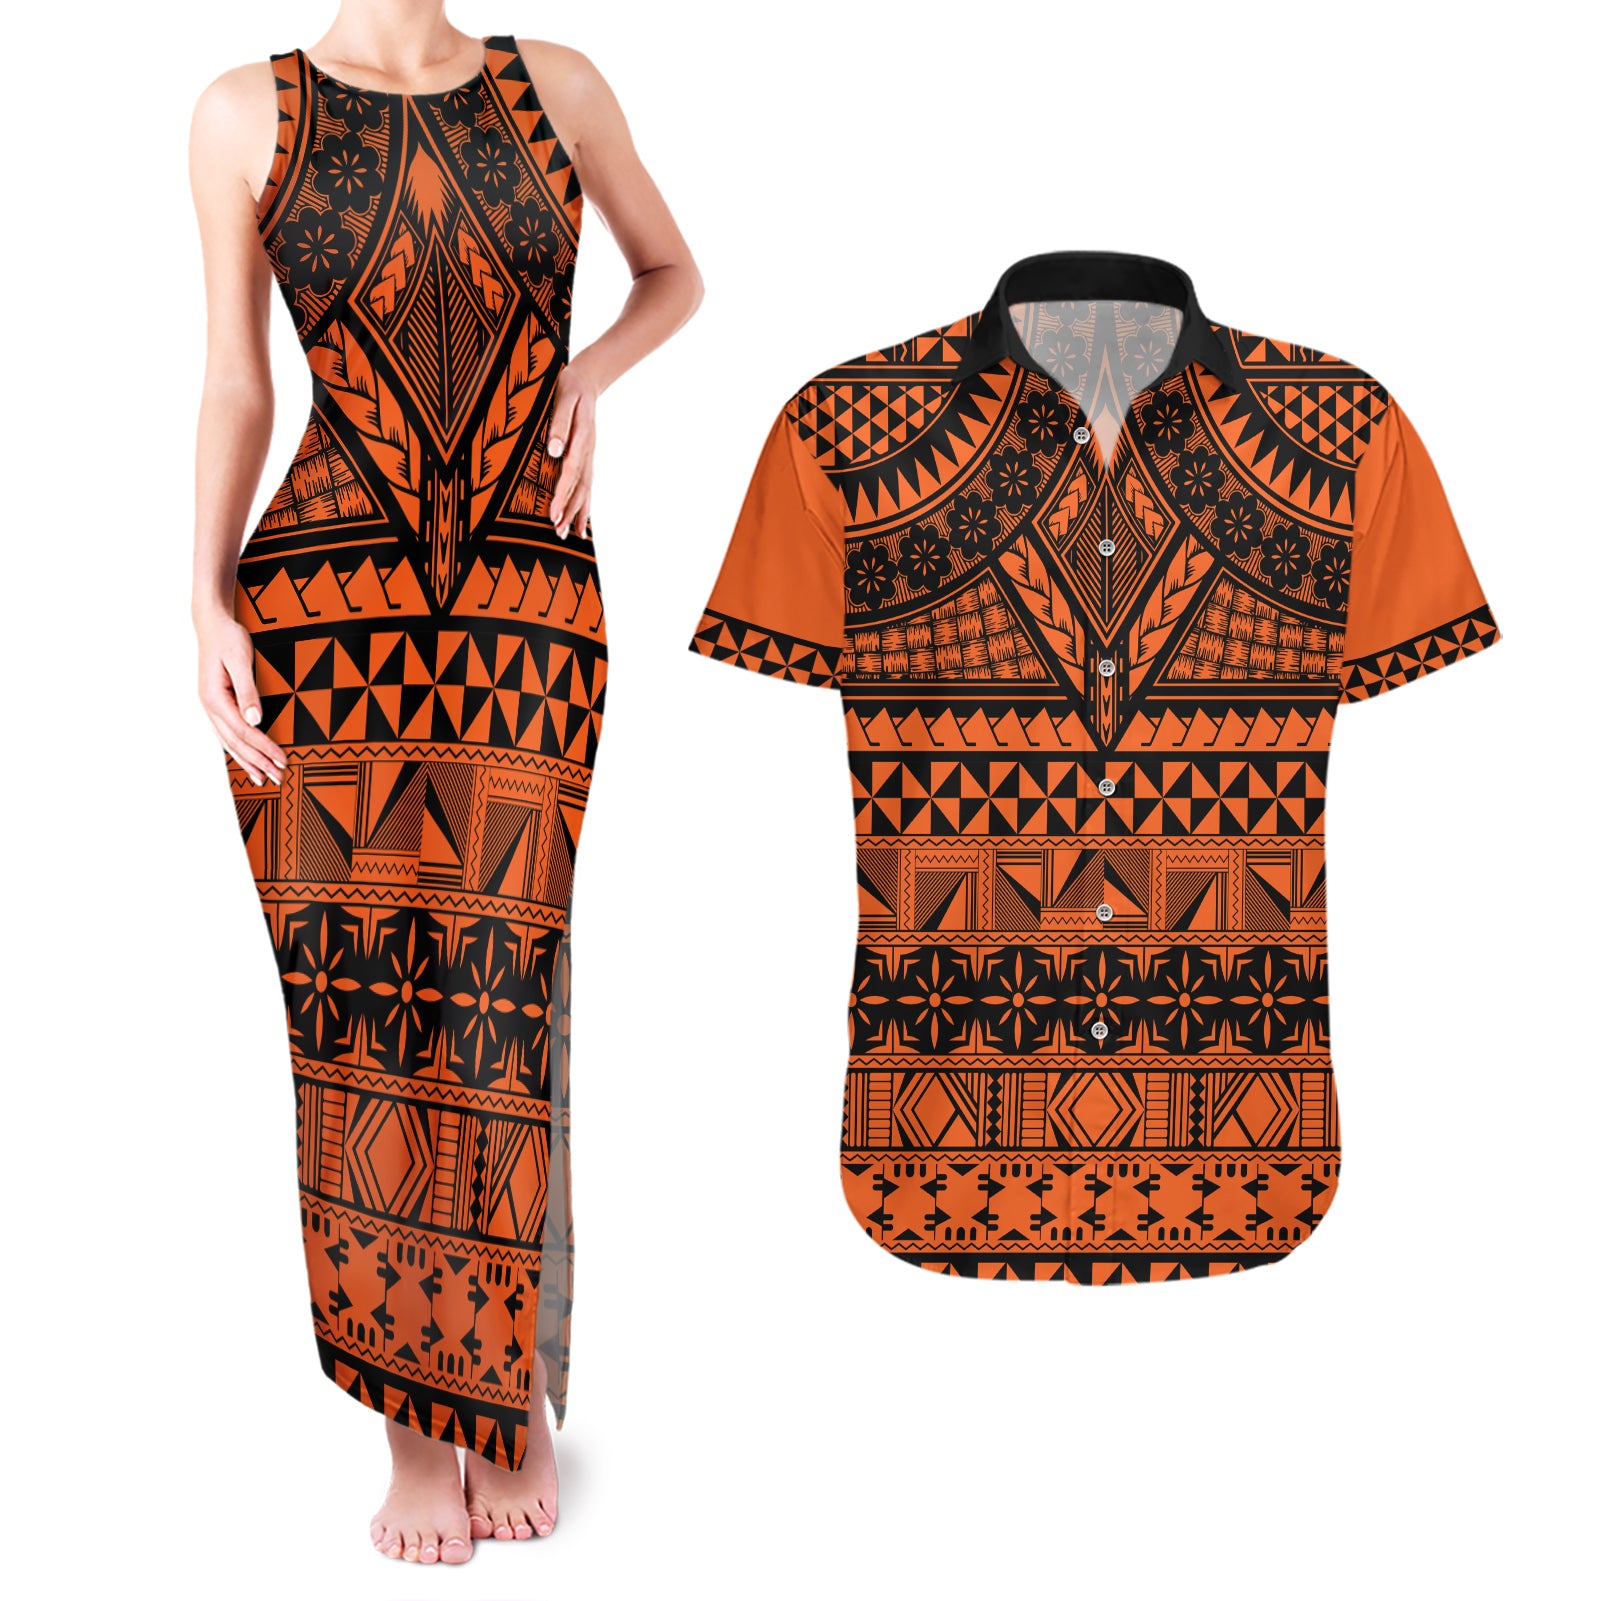 Halo Olaketa Solomon Islands Couples Matching Tank Maxi Dress and Hawaiian Shirt Melanesian Tribal Pattern Orange Version LT14 Orange - Polynesian Pride